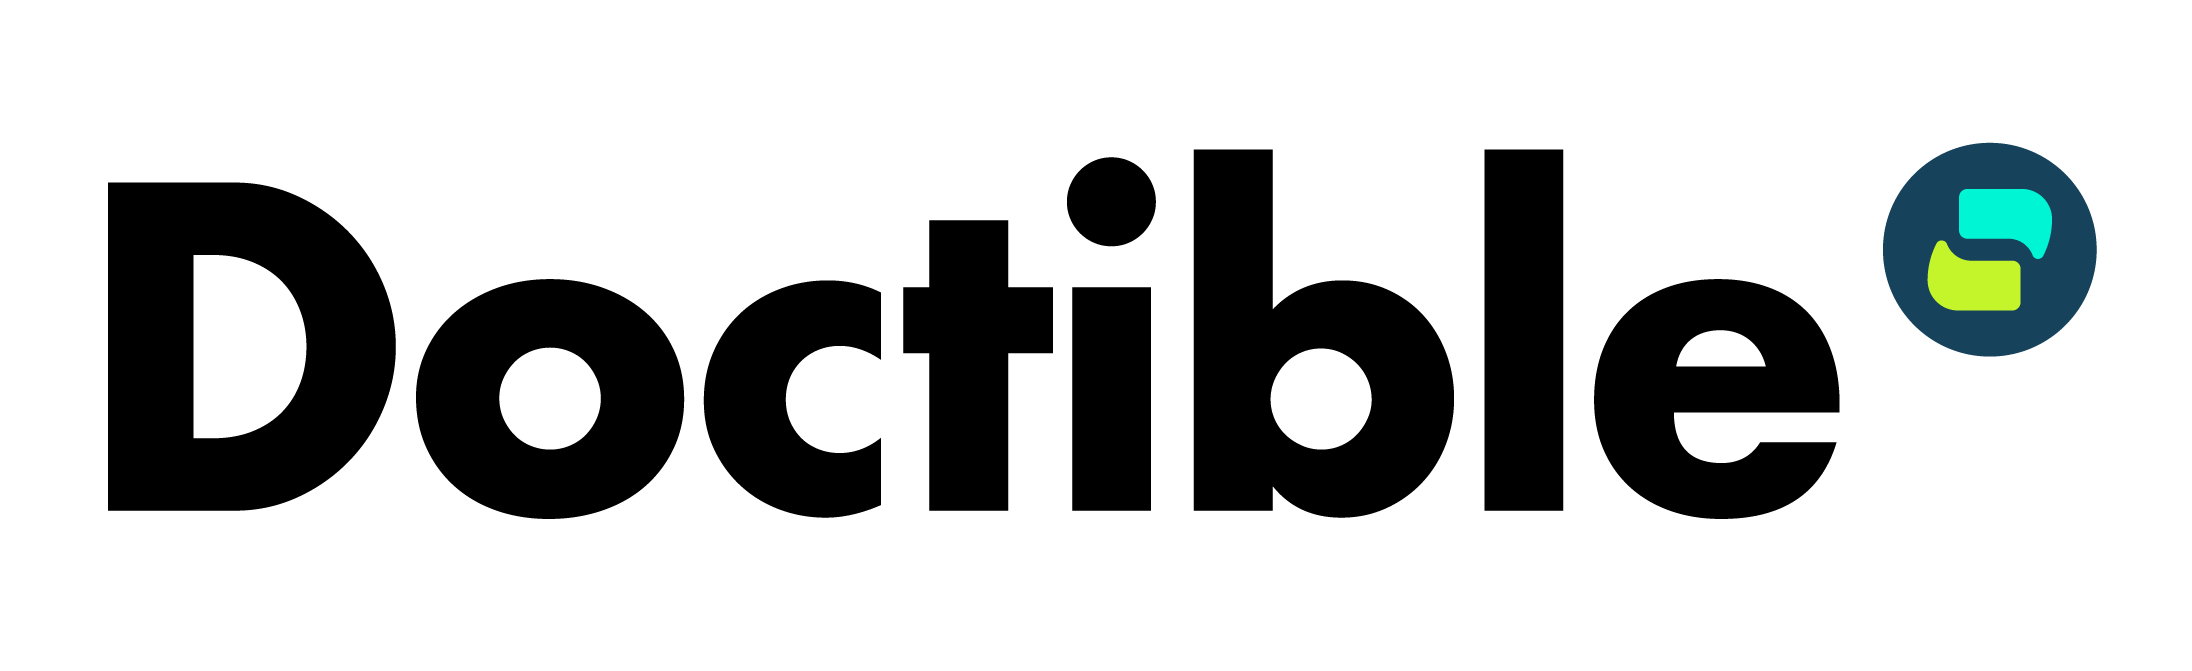 Doctible Company Logo